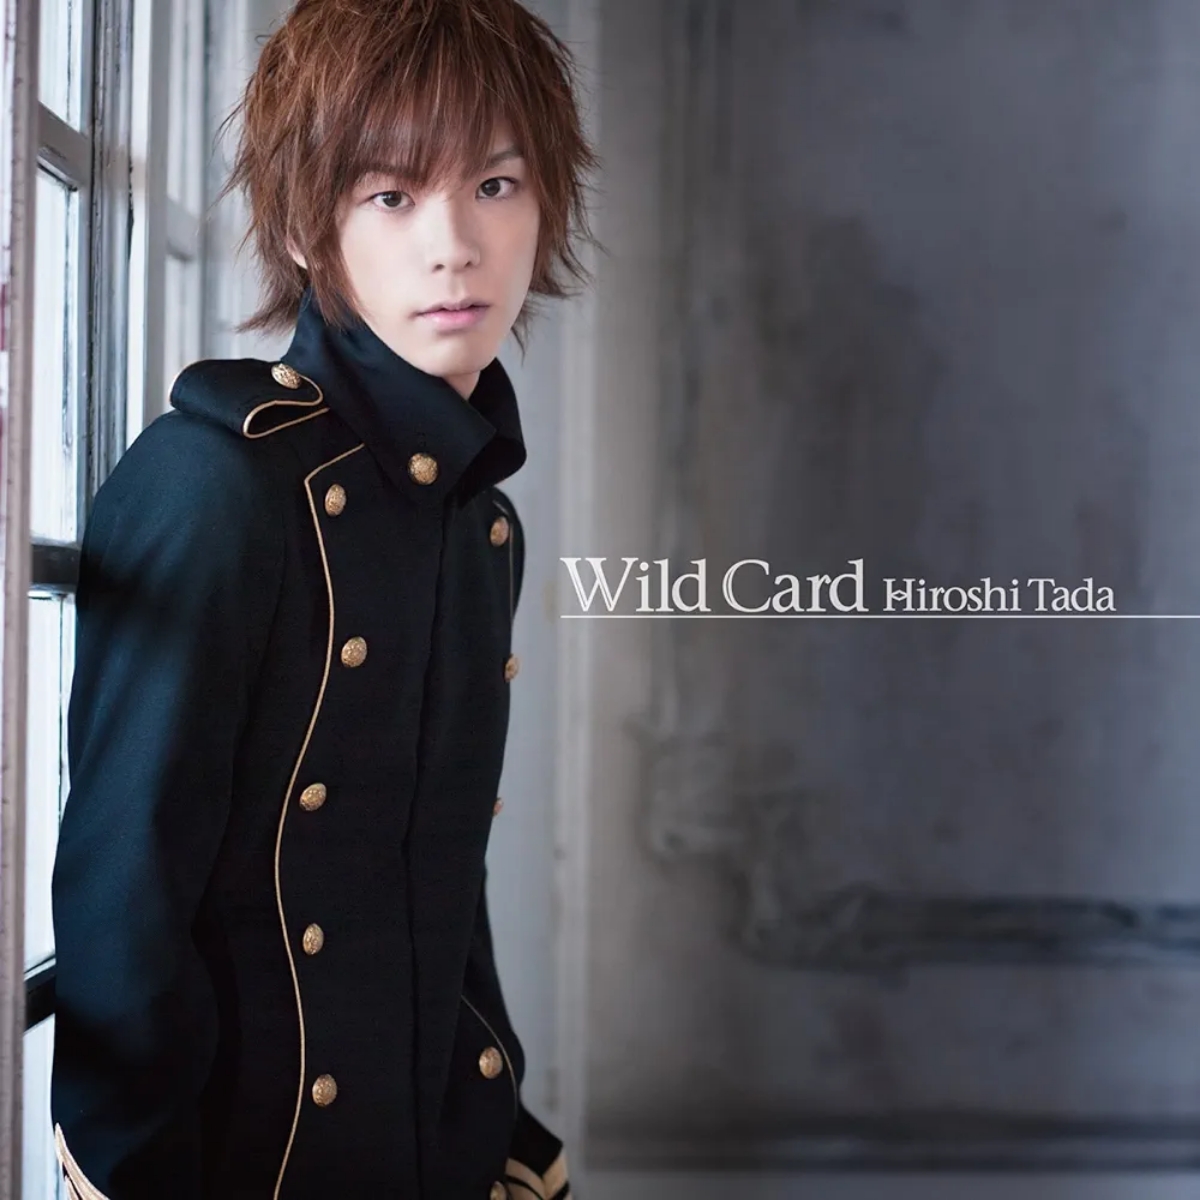 Hiroshi Tada - Wild Card